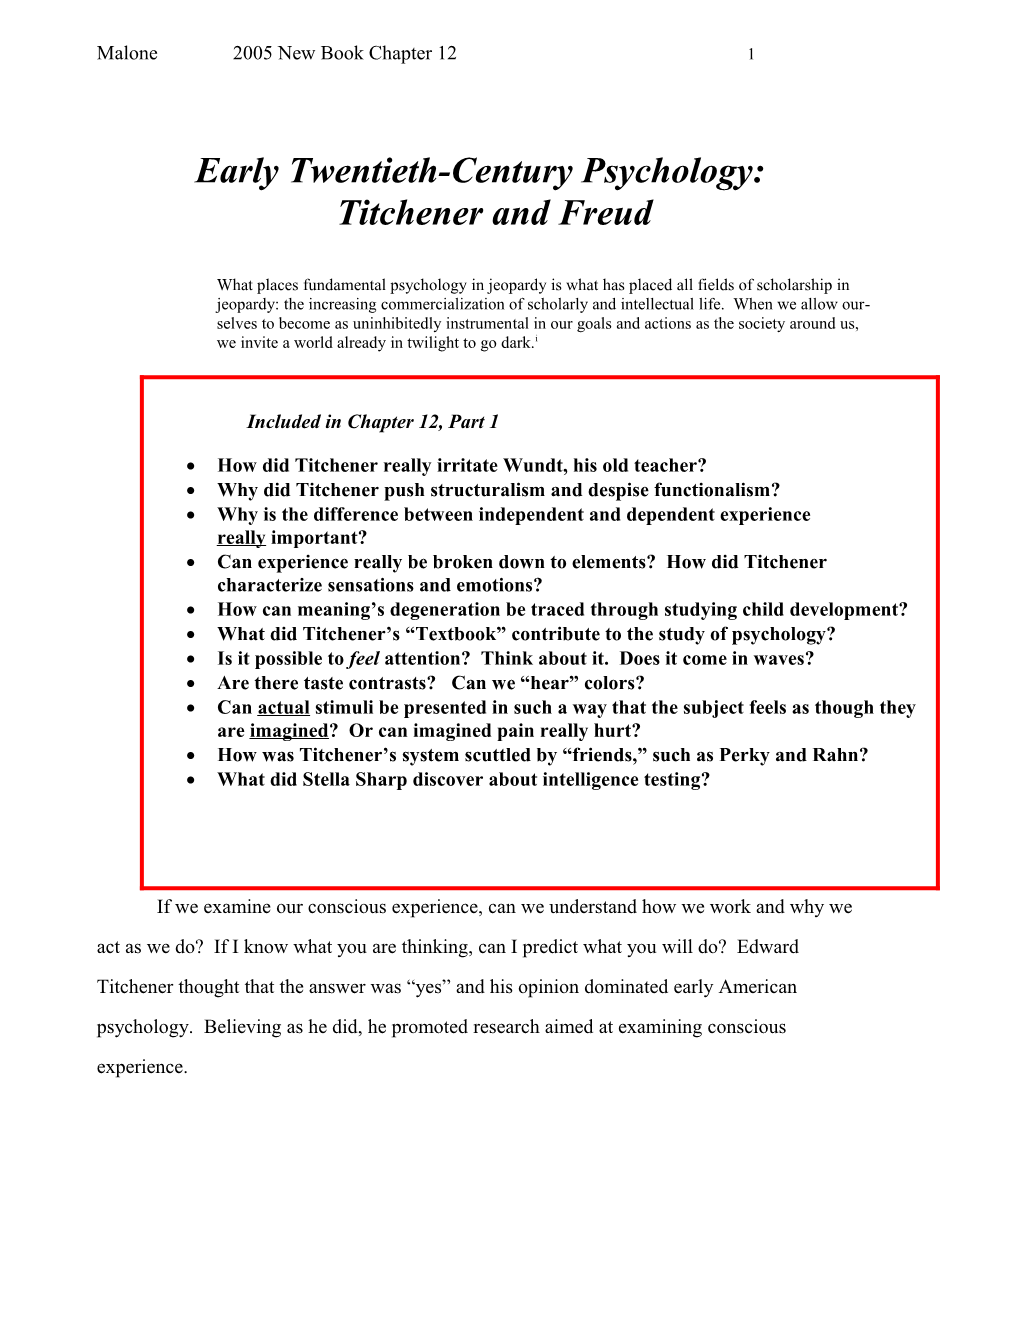 Modern Times: Early Twentieth-Century Psychology